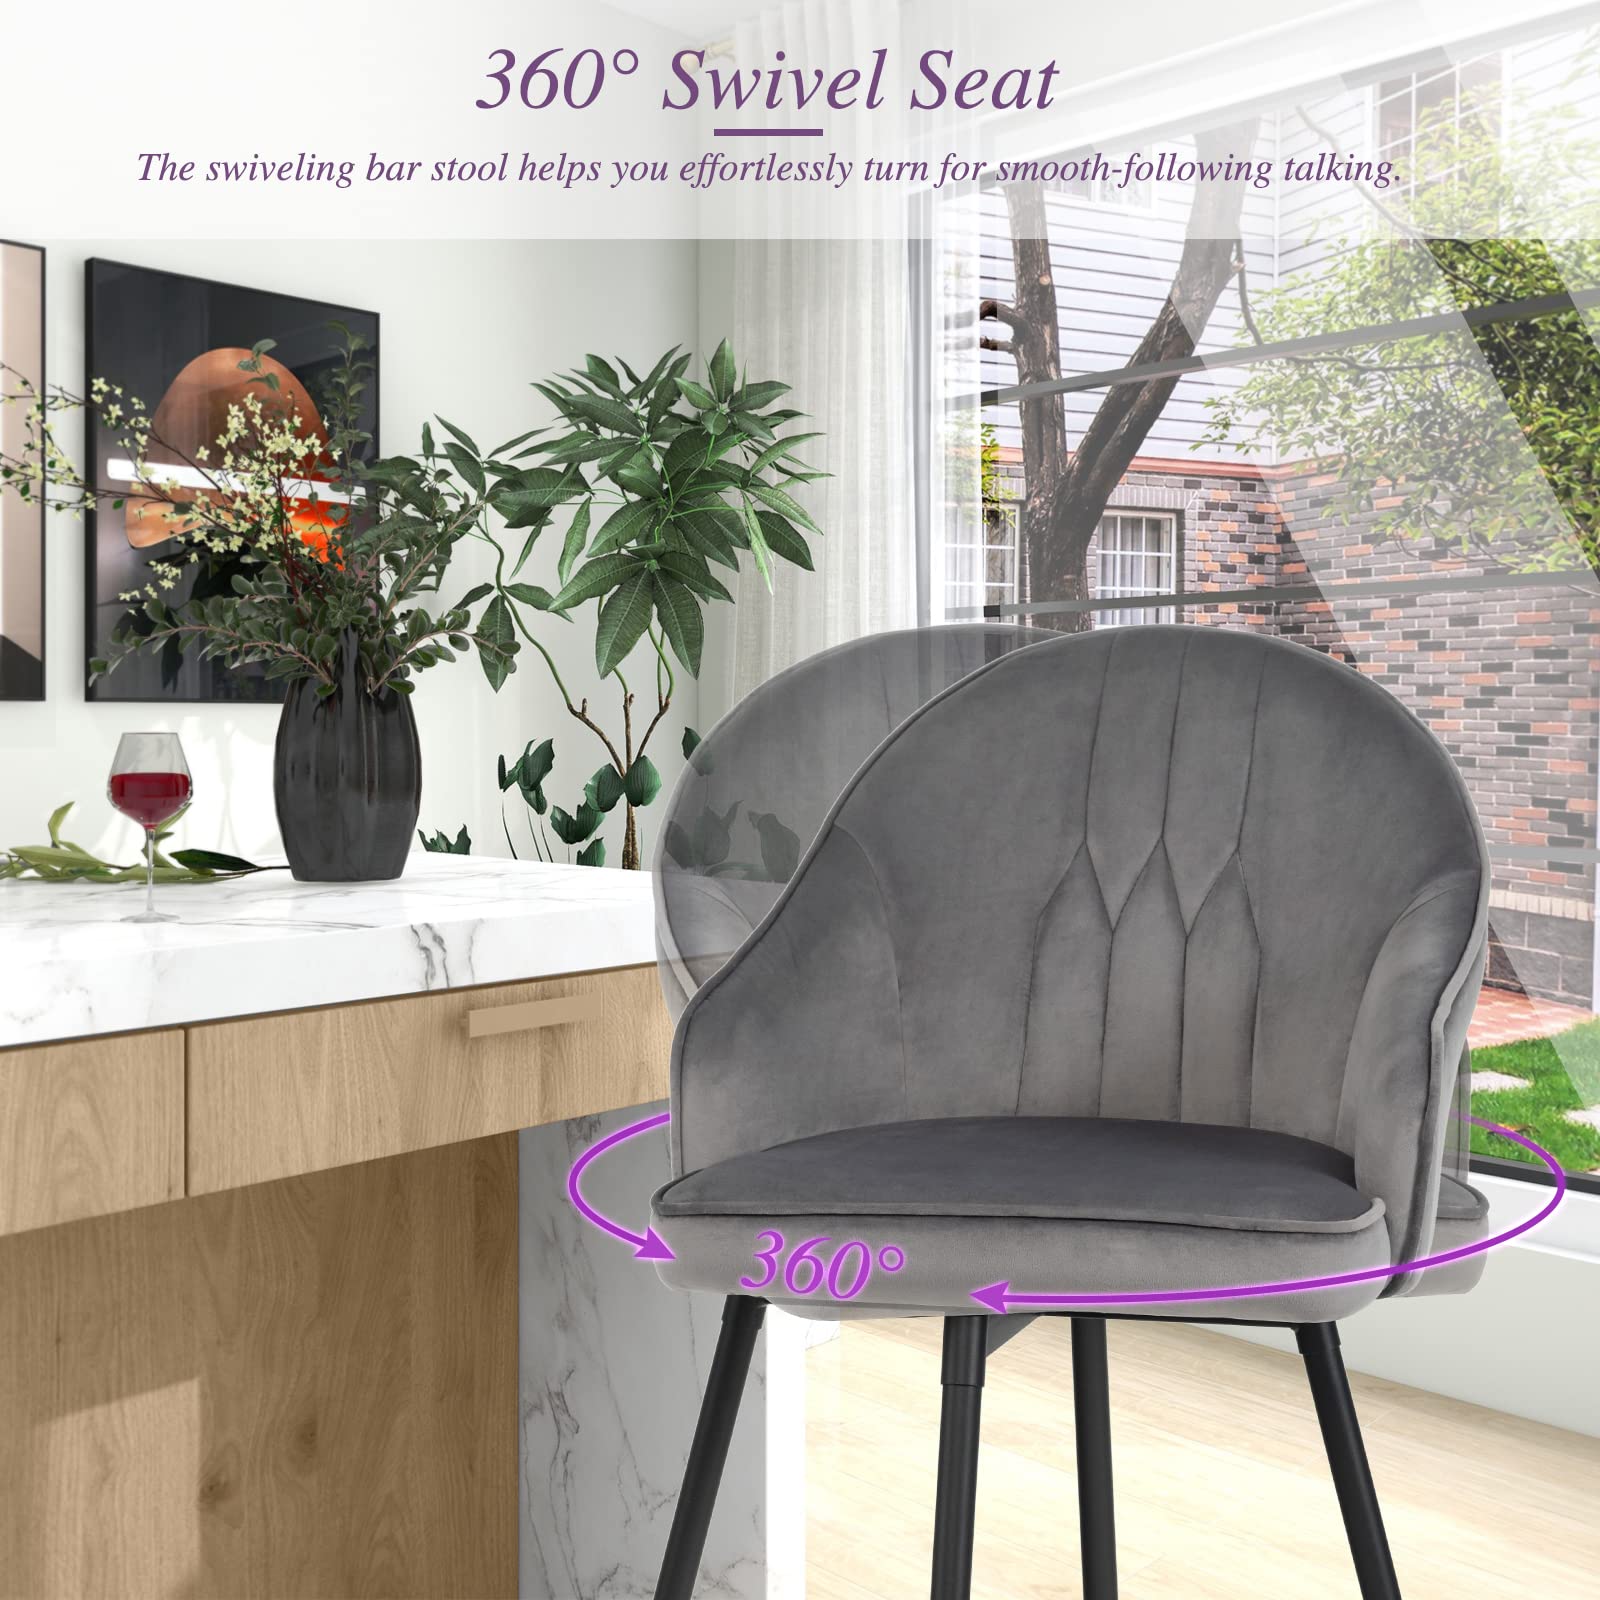 Giantex Modern Low Back Bar Chairs for Kitchen, Pub, Bistro, Grey